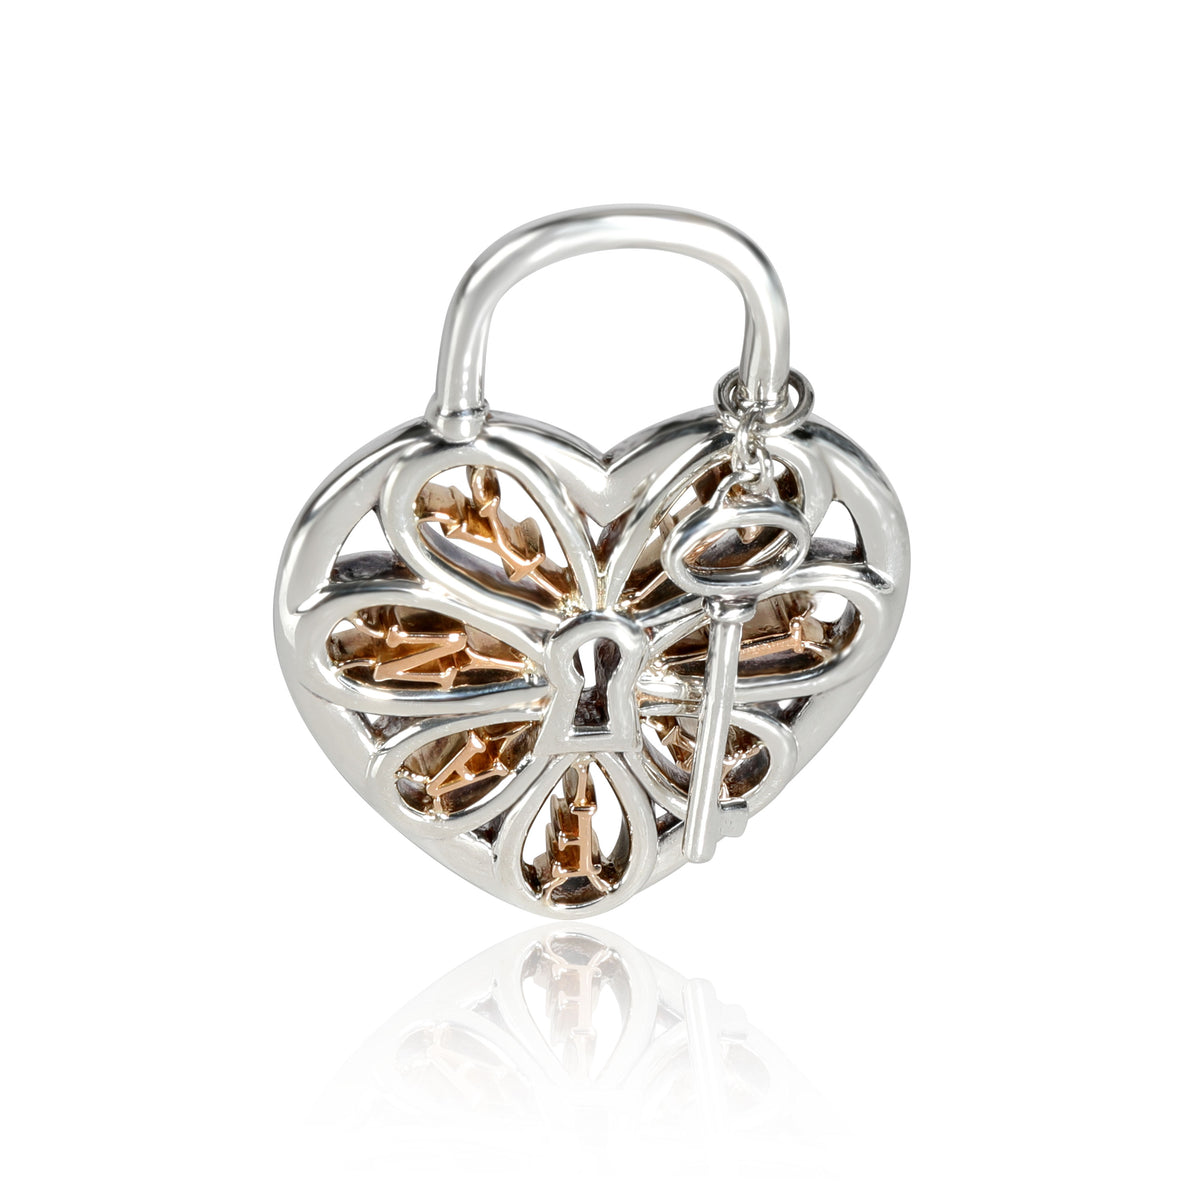 Autre Marque Tiffany Pink 18K Heart Lock Pendant Necklace Golden